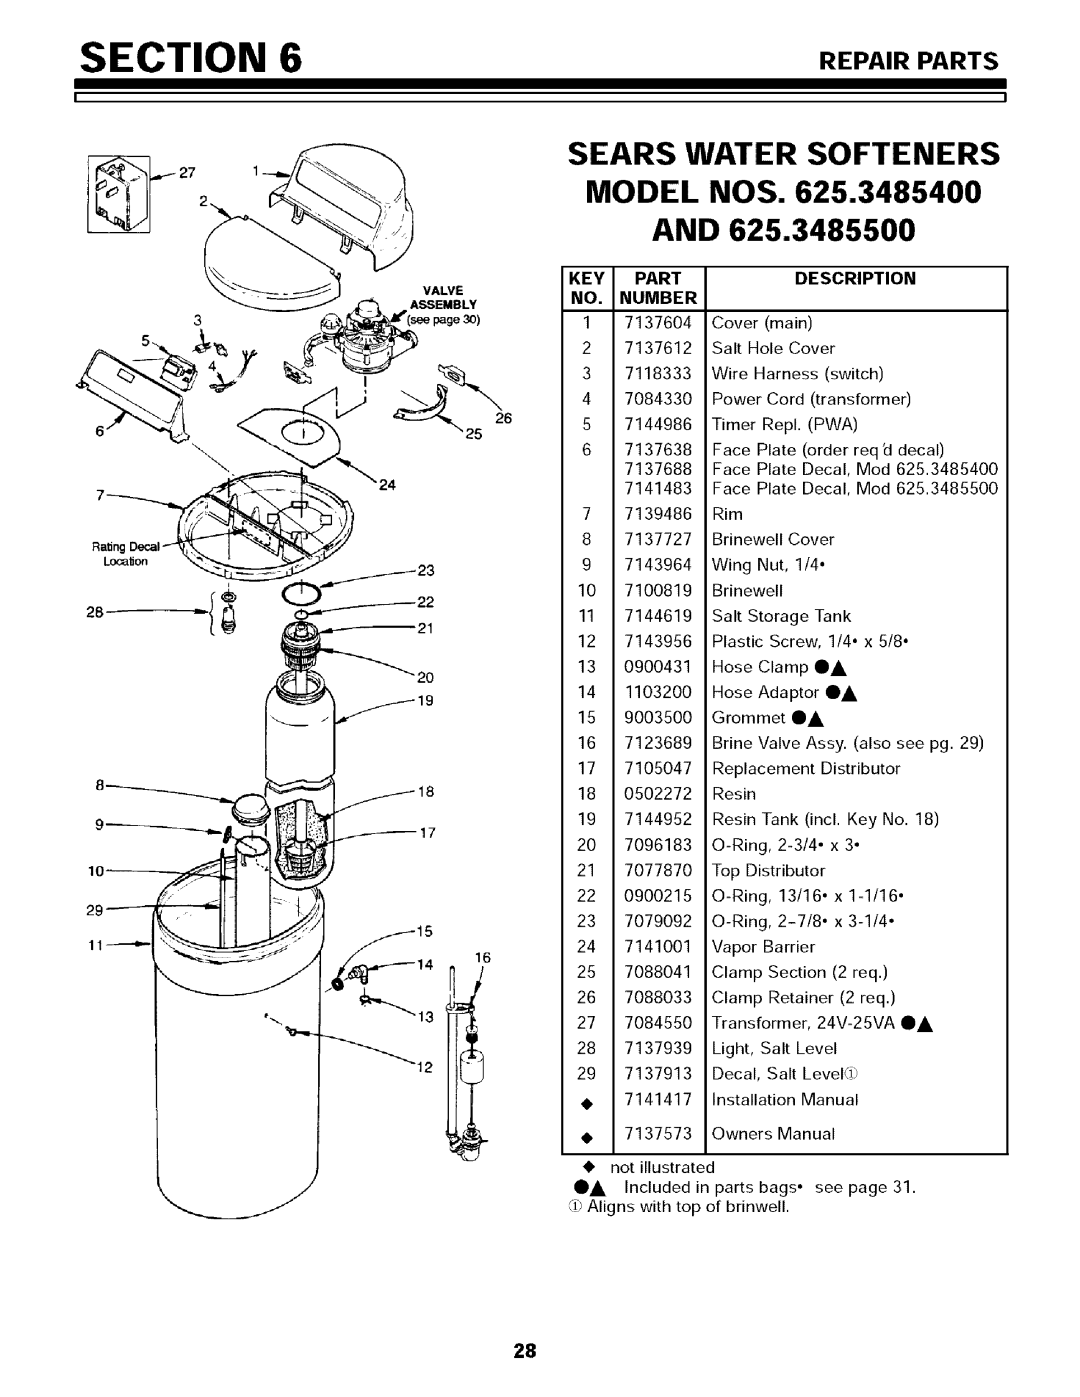 Sears 625.34854, 625.34855 owner manual Repairparts, KEY Part Description Number 